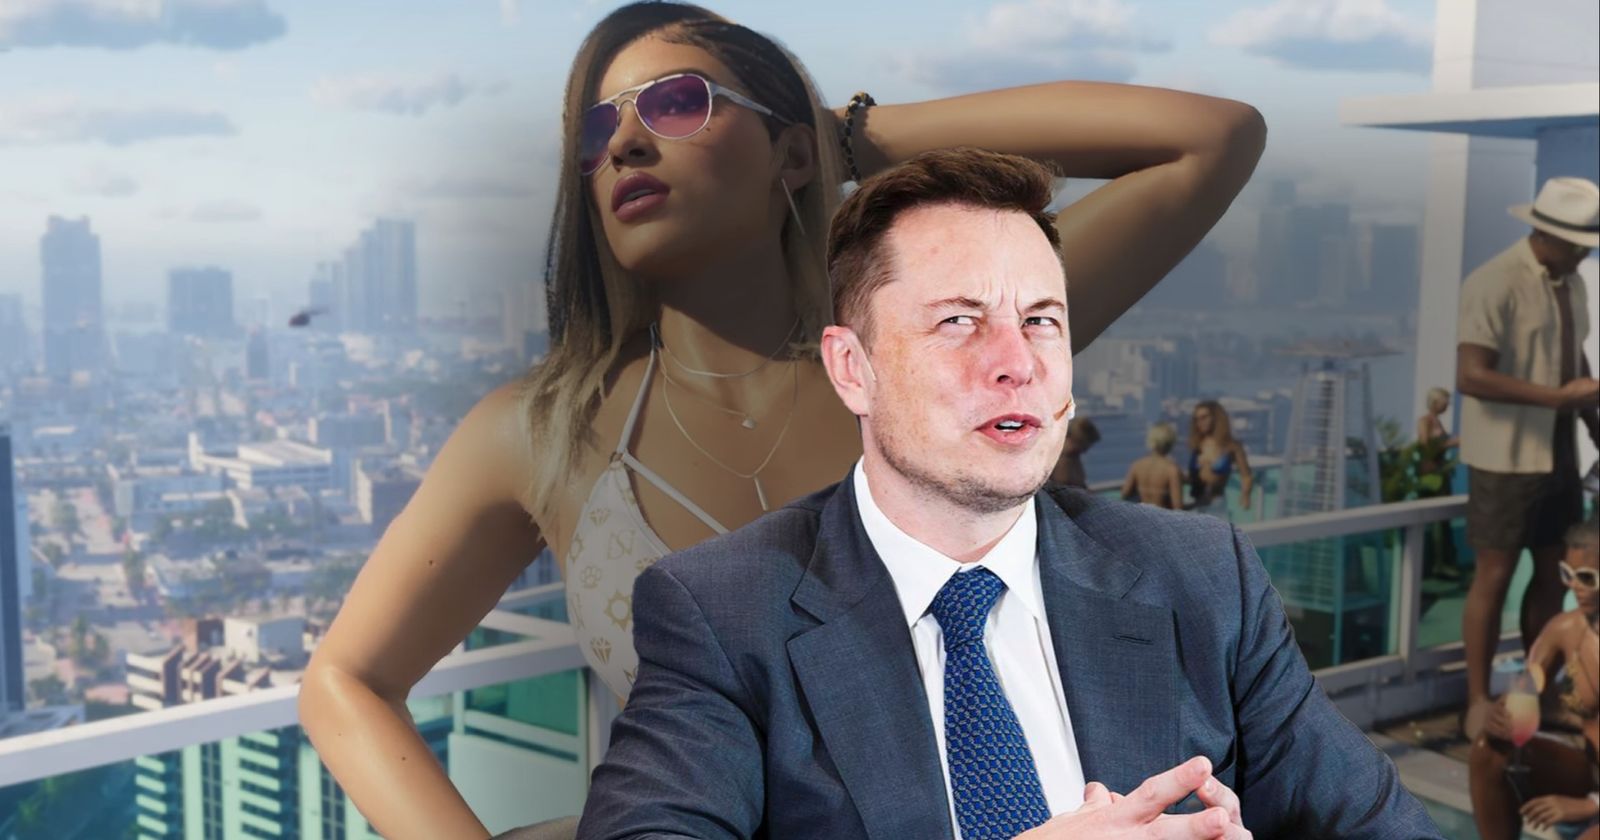 Rockstar Games mock Twitter with GTA 6 trailer, Elon Musk says he